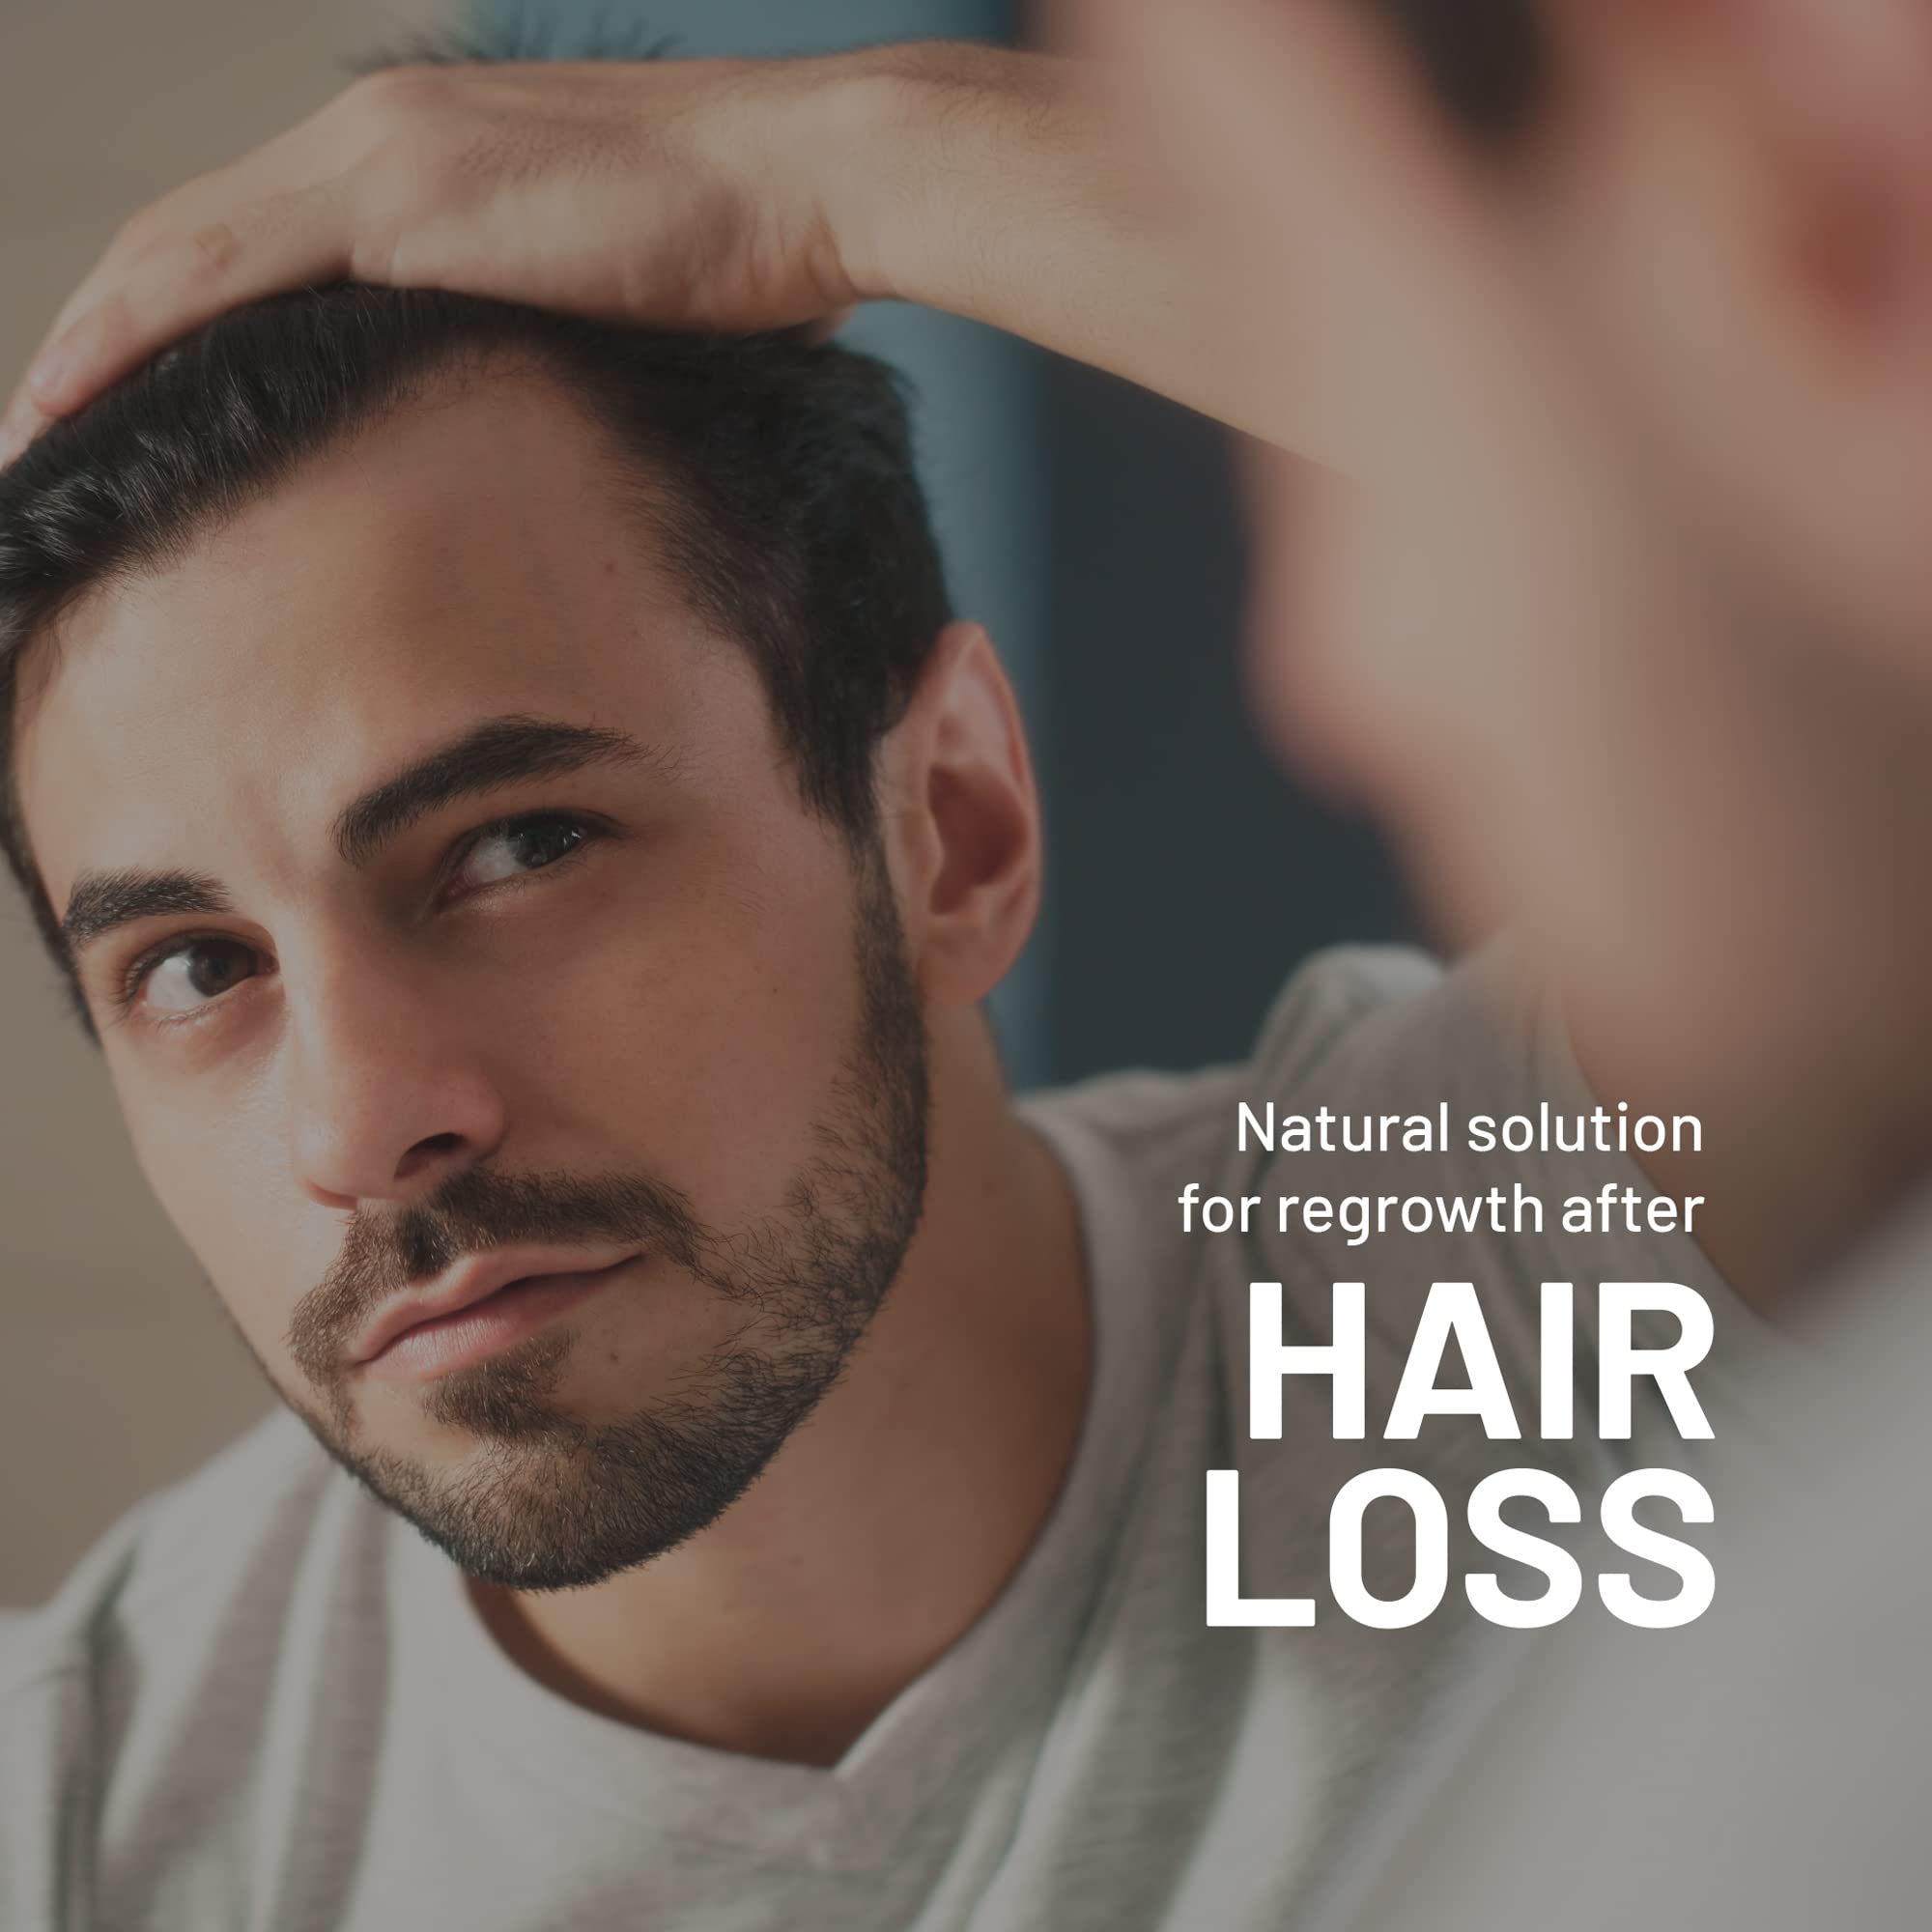 Hair Growth Supplement for Men - Grow Hair, Stop Hair Loss & Regrow Hair, Beard Growth, Skin and Nail Vitamin - Mens Hair Regrowth with Biotin for Men, Kelp, Bamboo & More (60 Count)